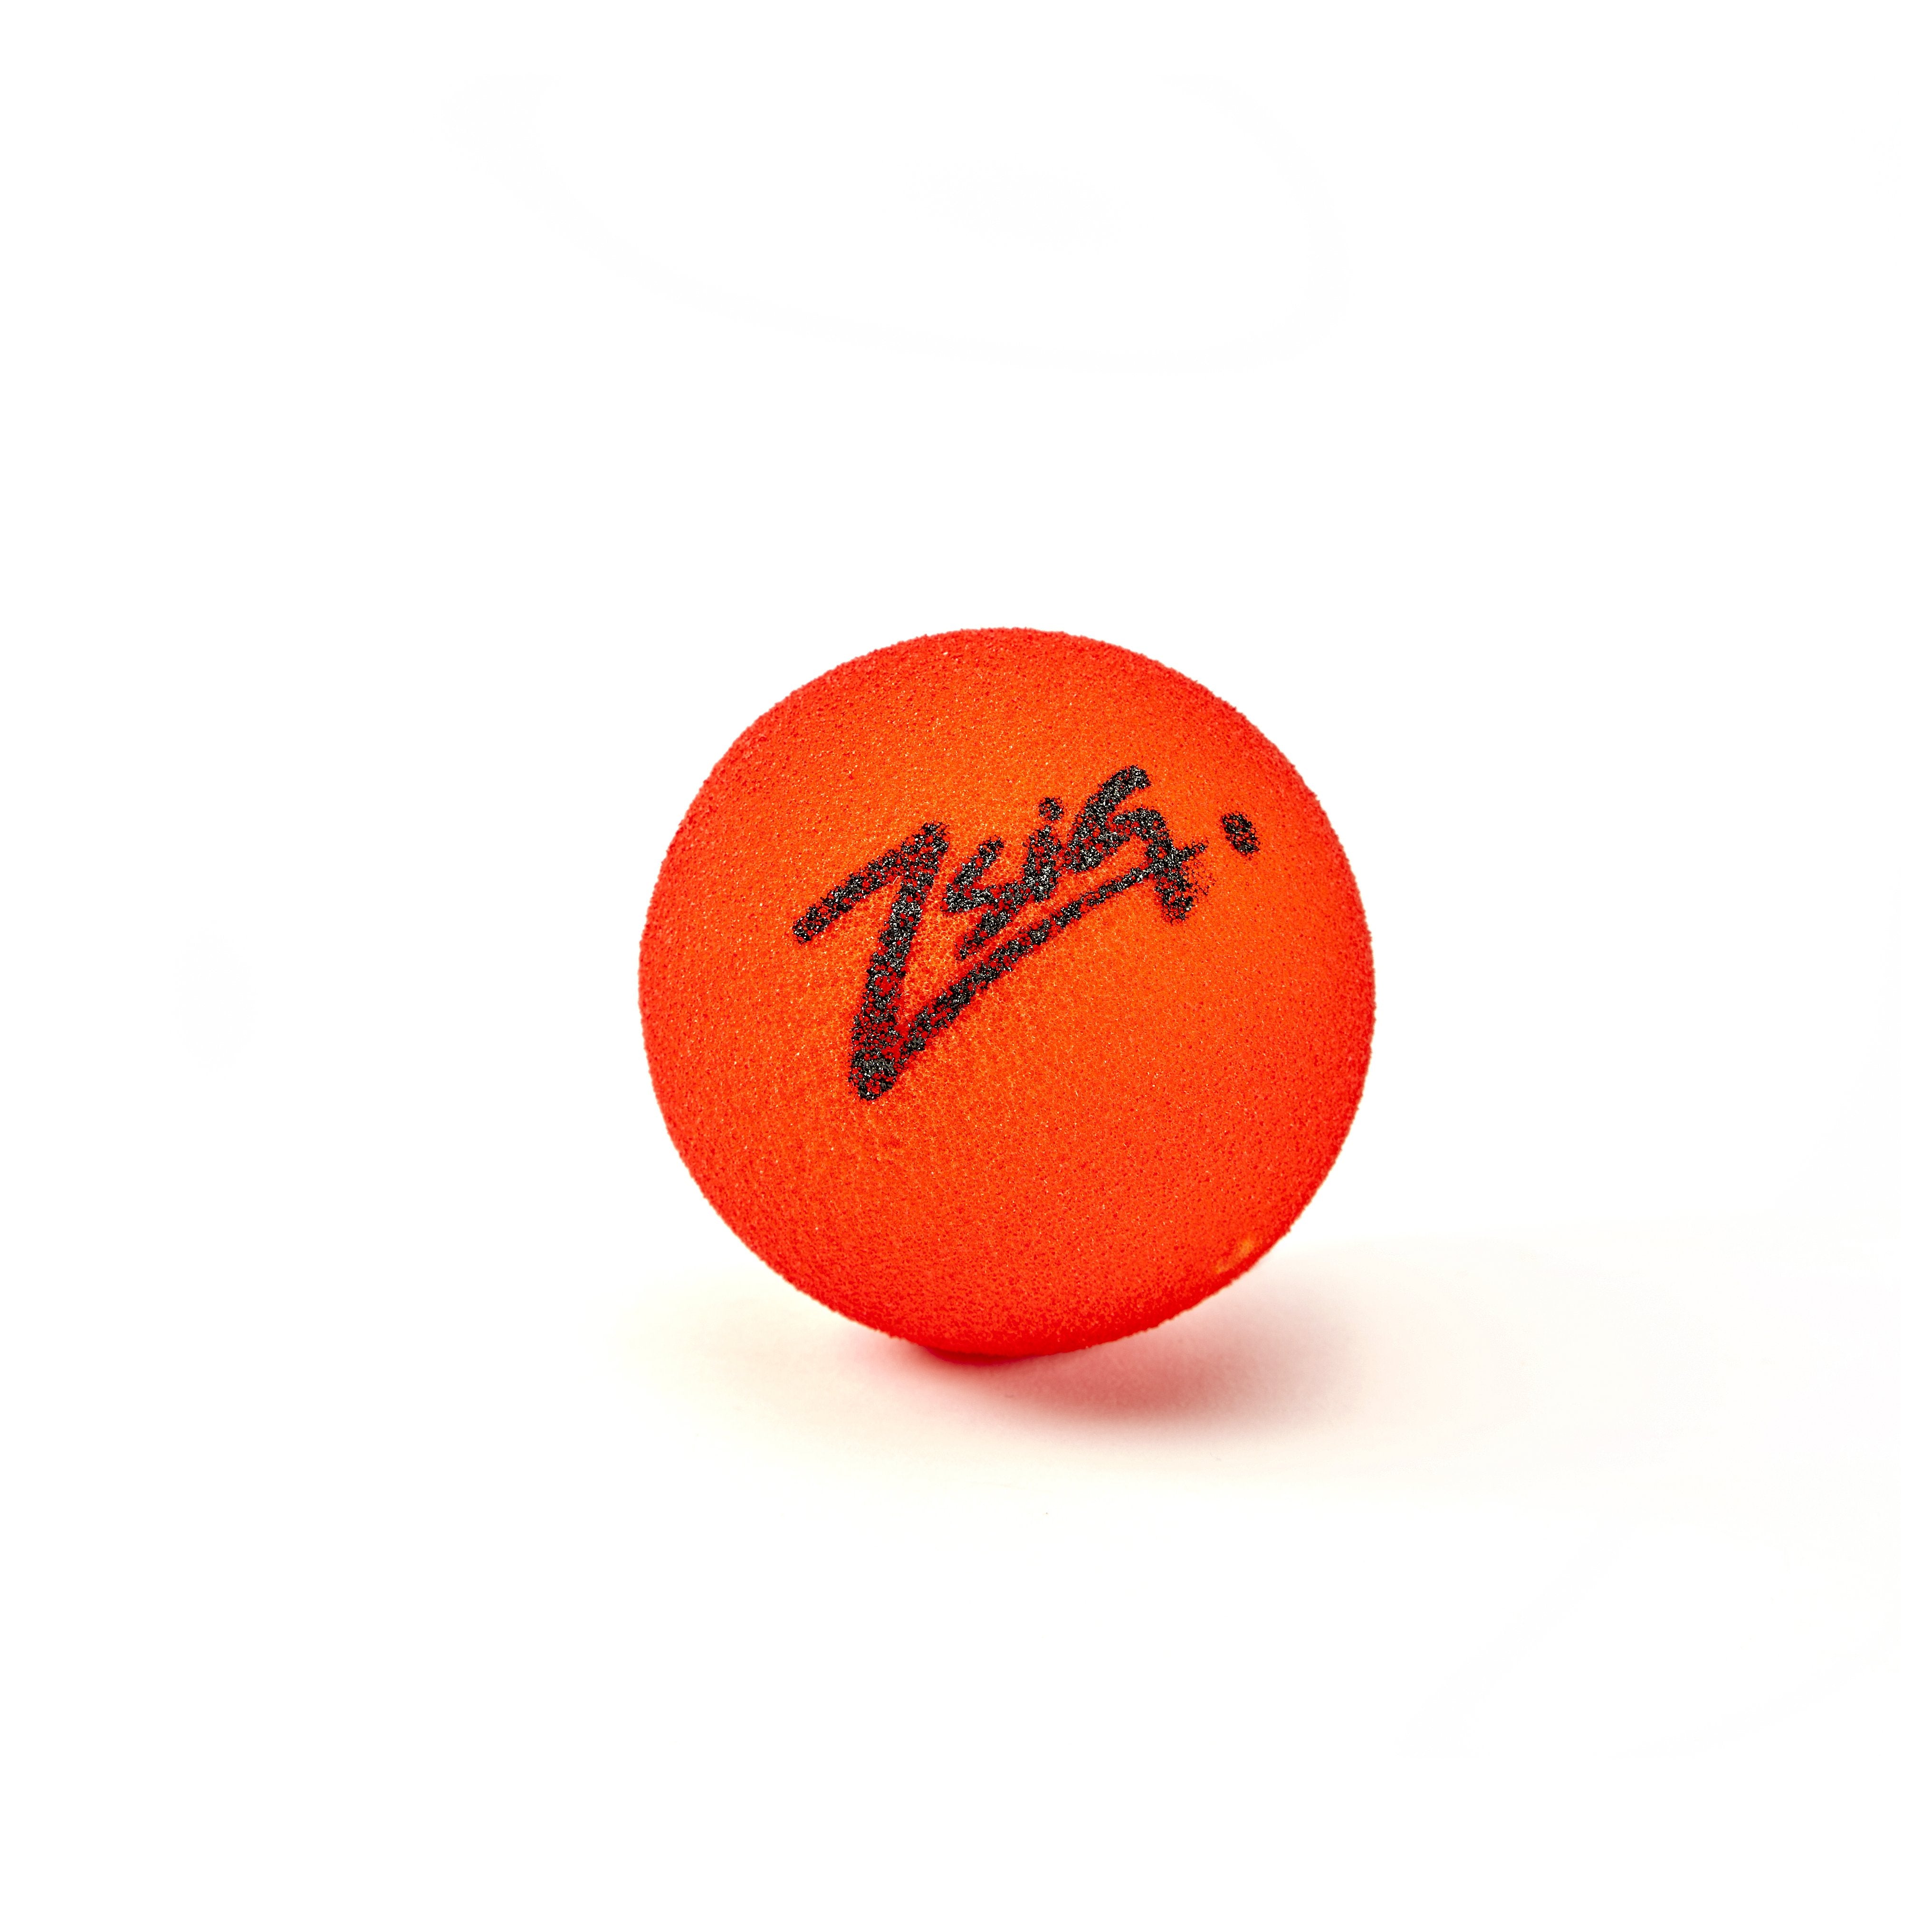 ZSIG Tough Guy pick-resistant 8cm red Mini Tennis Ball